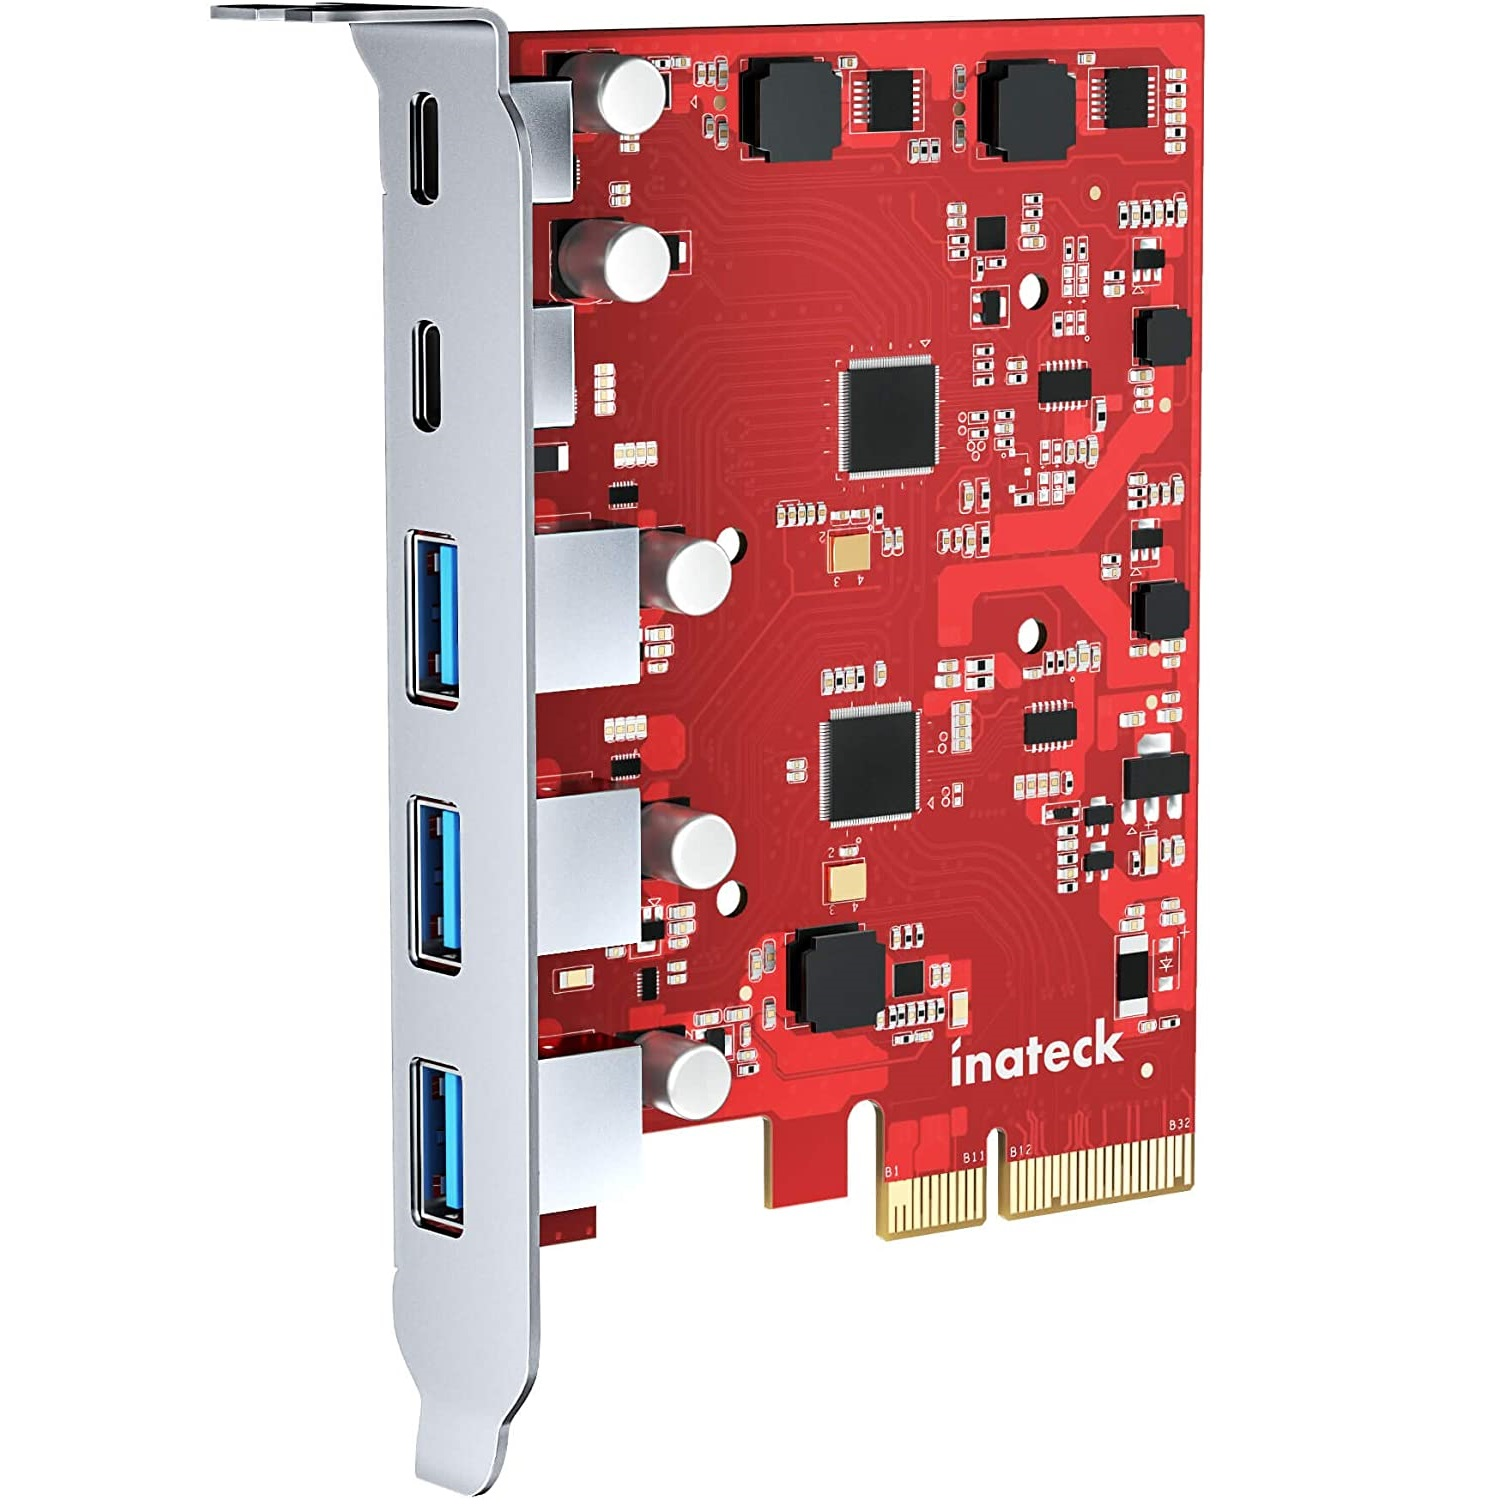 INATECK PCI RedComets USB Express-Karte 2 Express U21 20 3.2 zu mit Karte PCIe Gen Bandbreite Gbit/s karte